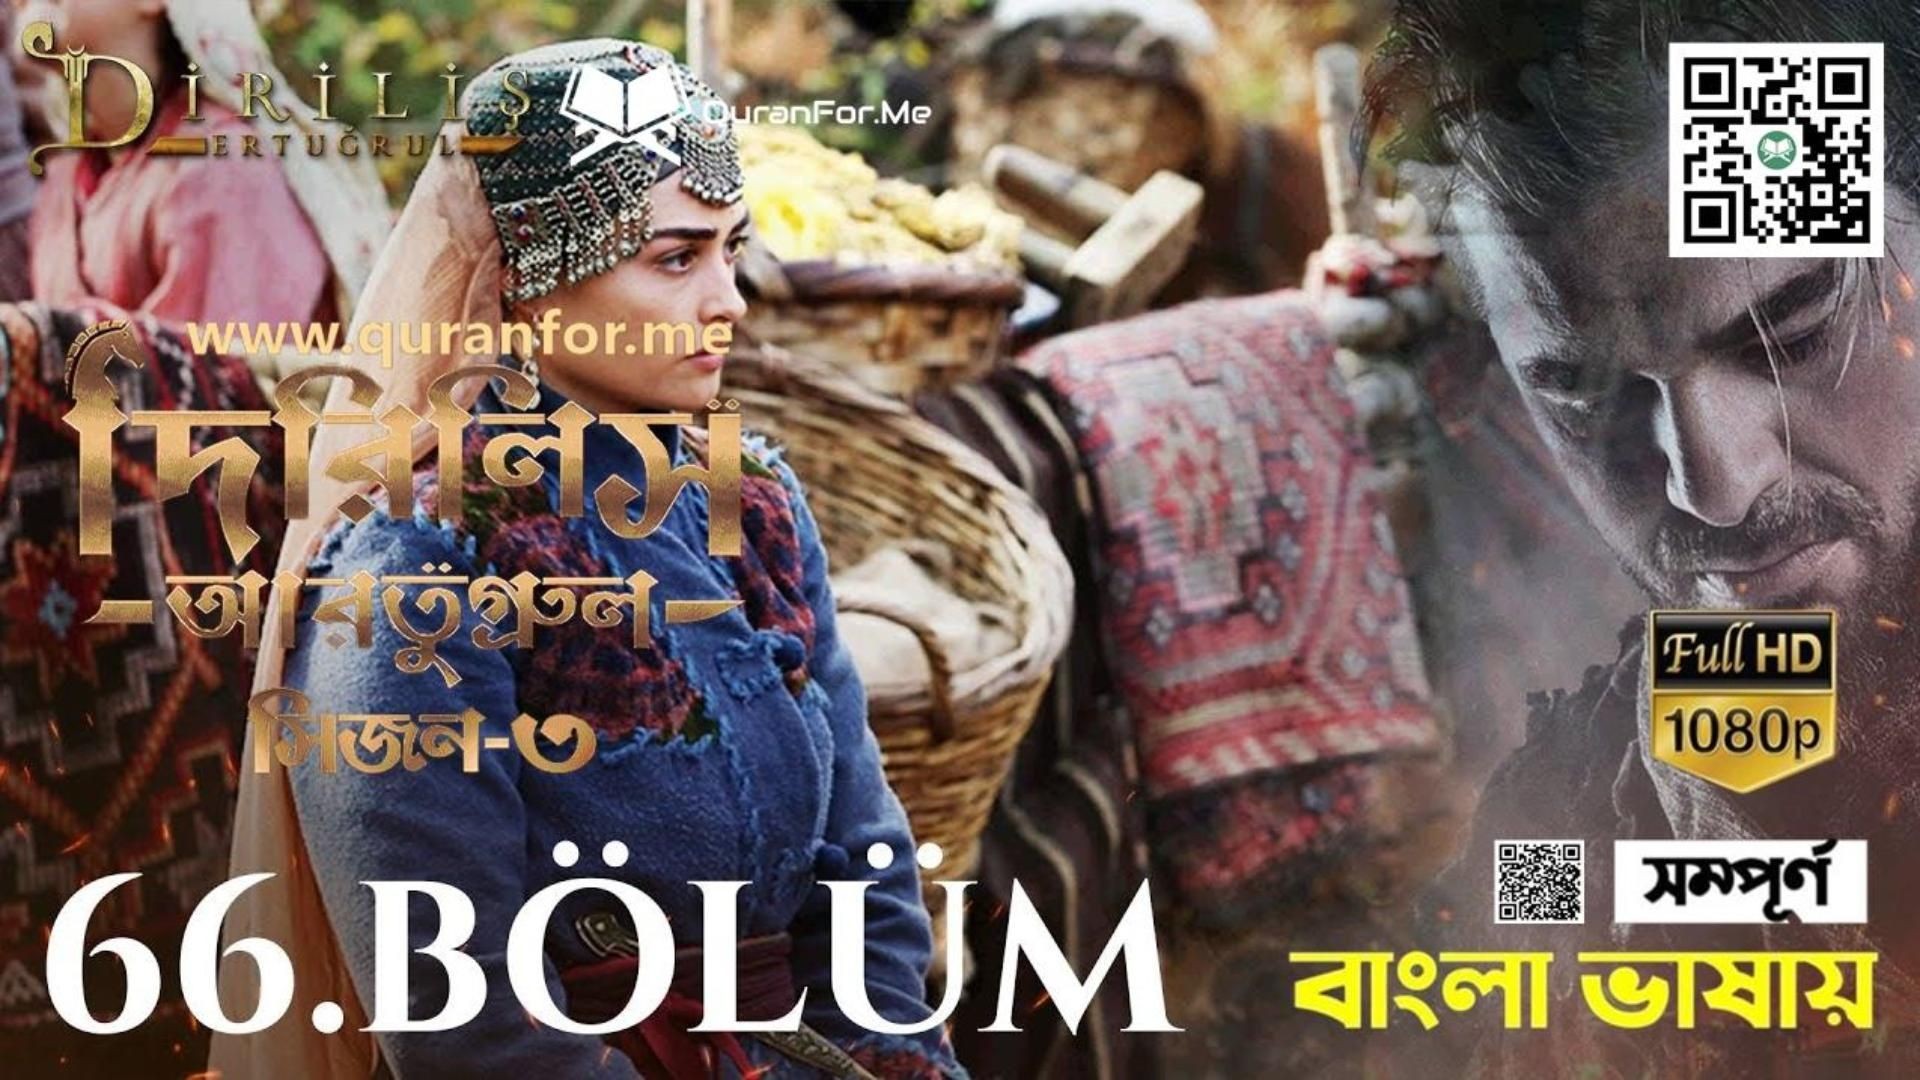 ⁣Dirilis Ertugrul | Season 3 | Bolum 66 | Bangla Dubbing | দিরিলিস আরতুগ্রুল | বাংলা ডাবিং